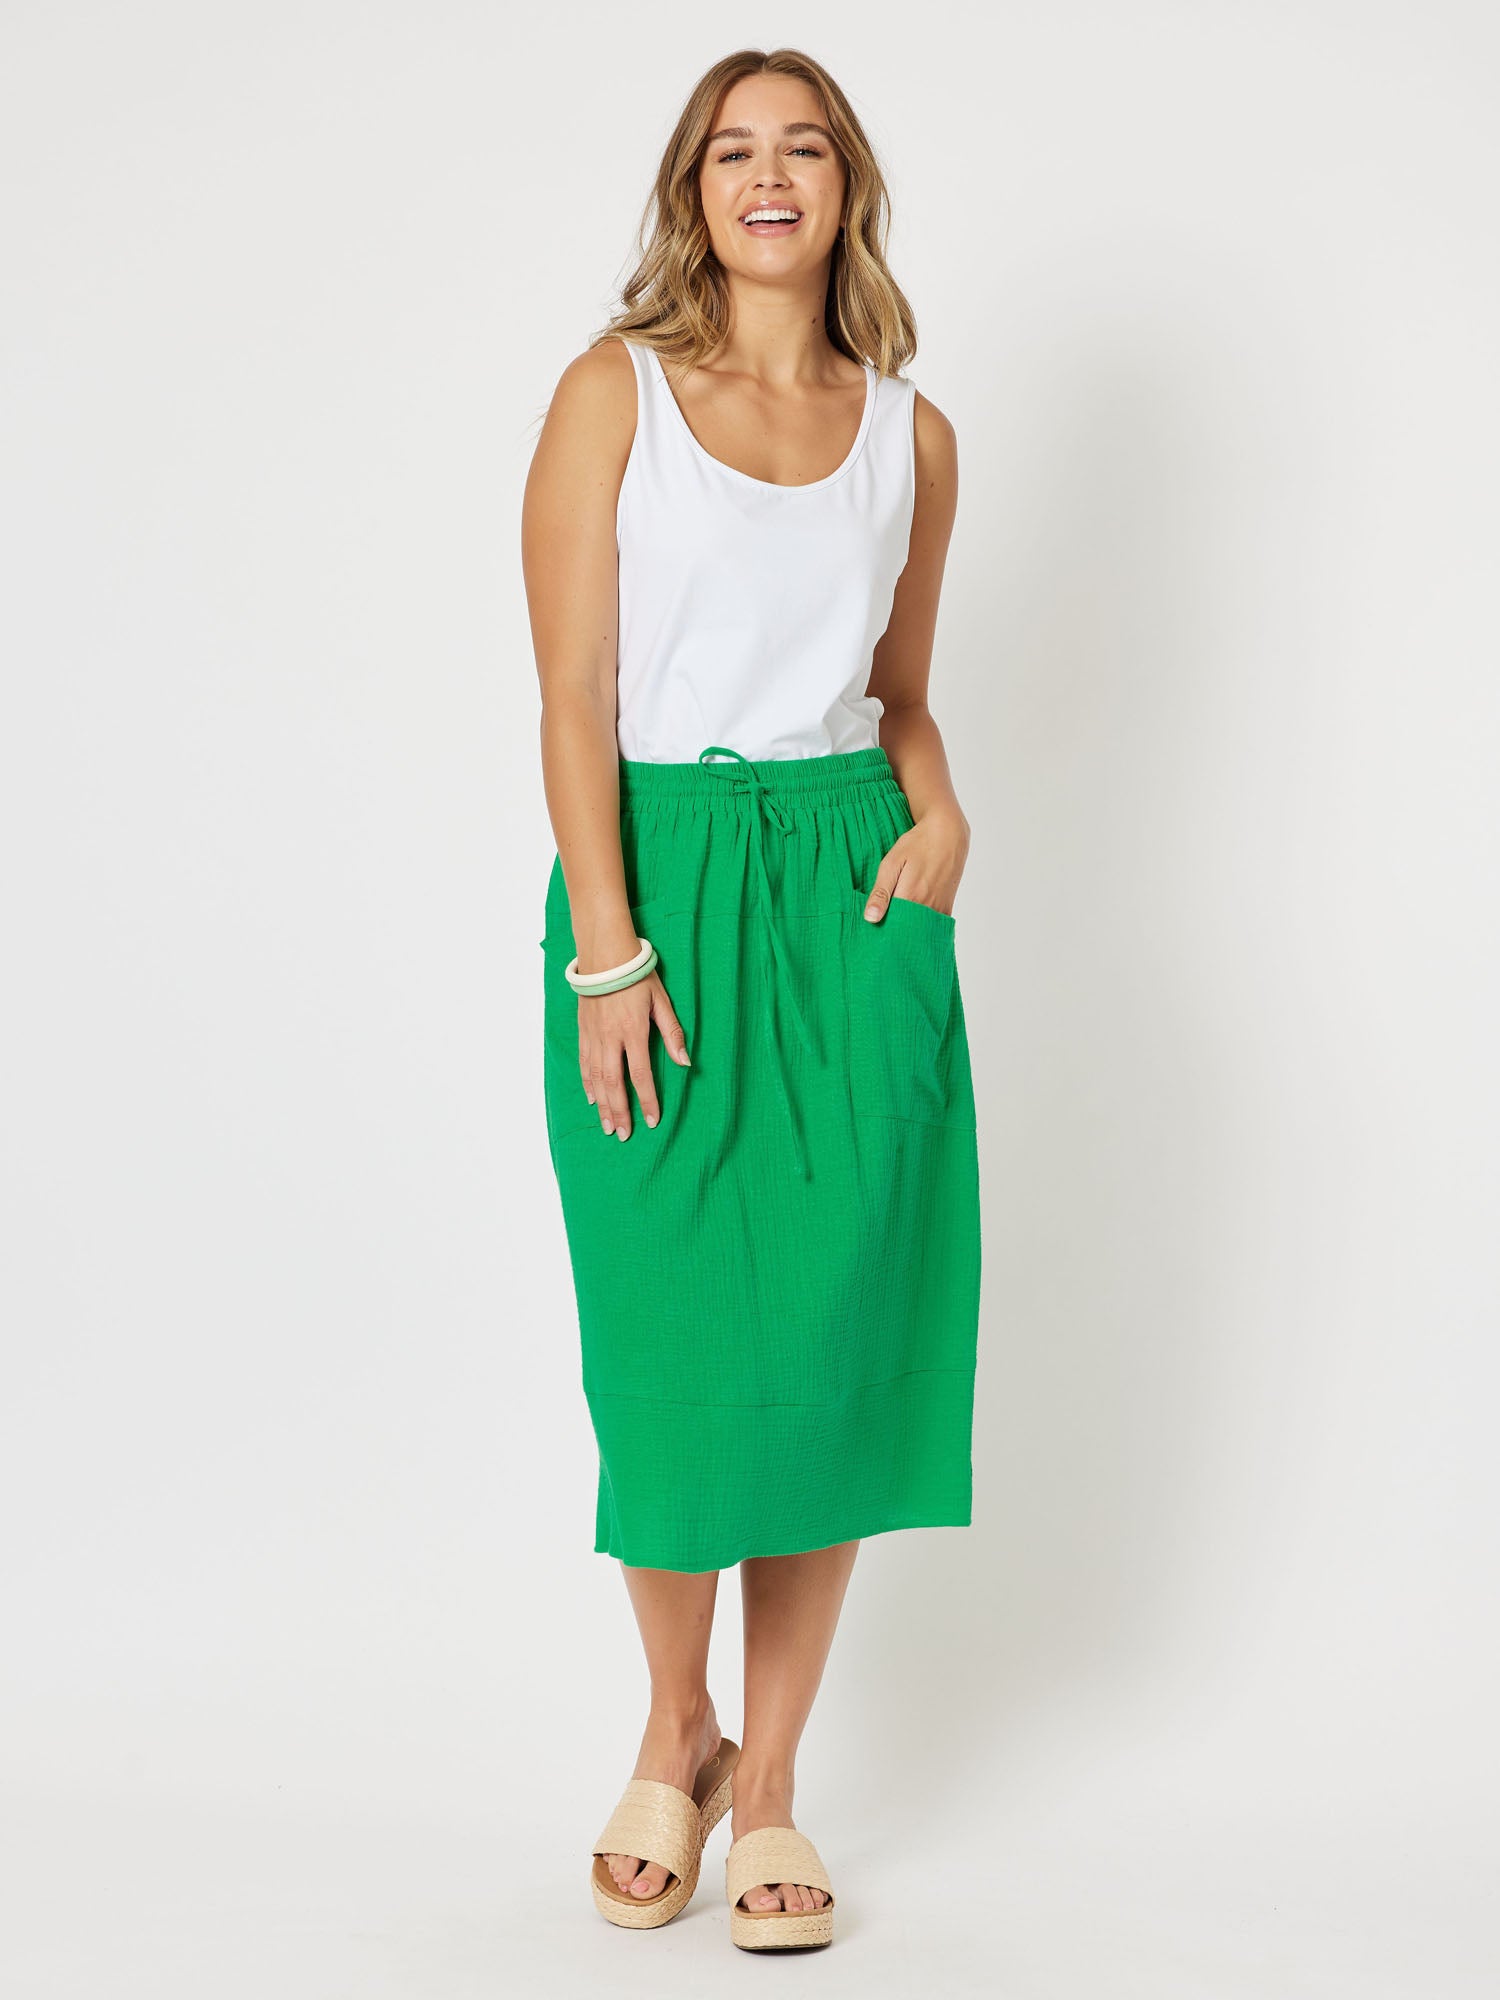 Byron Cotton Skirt - Emerald